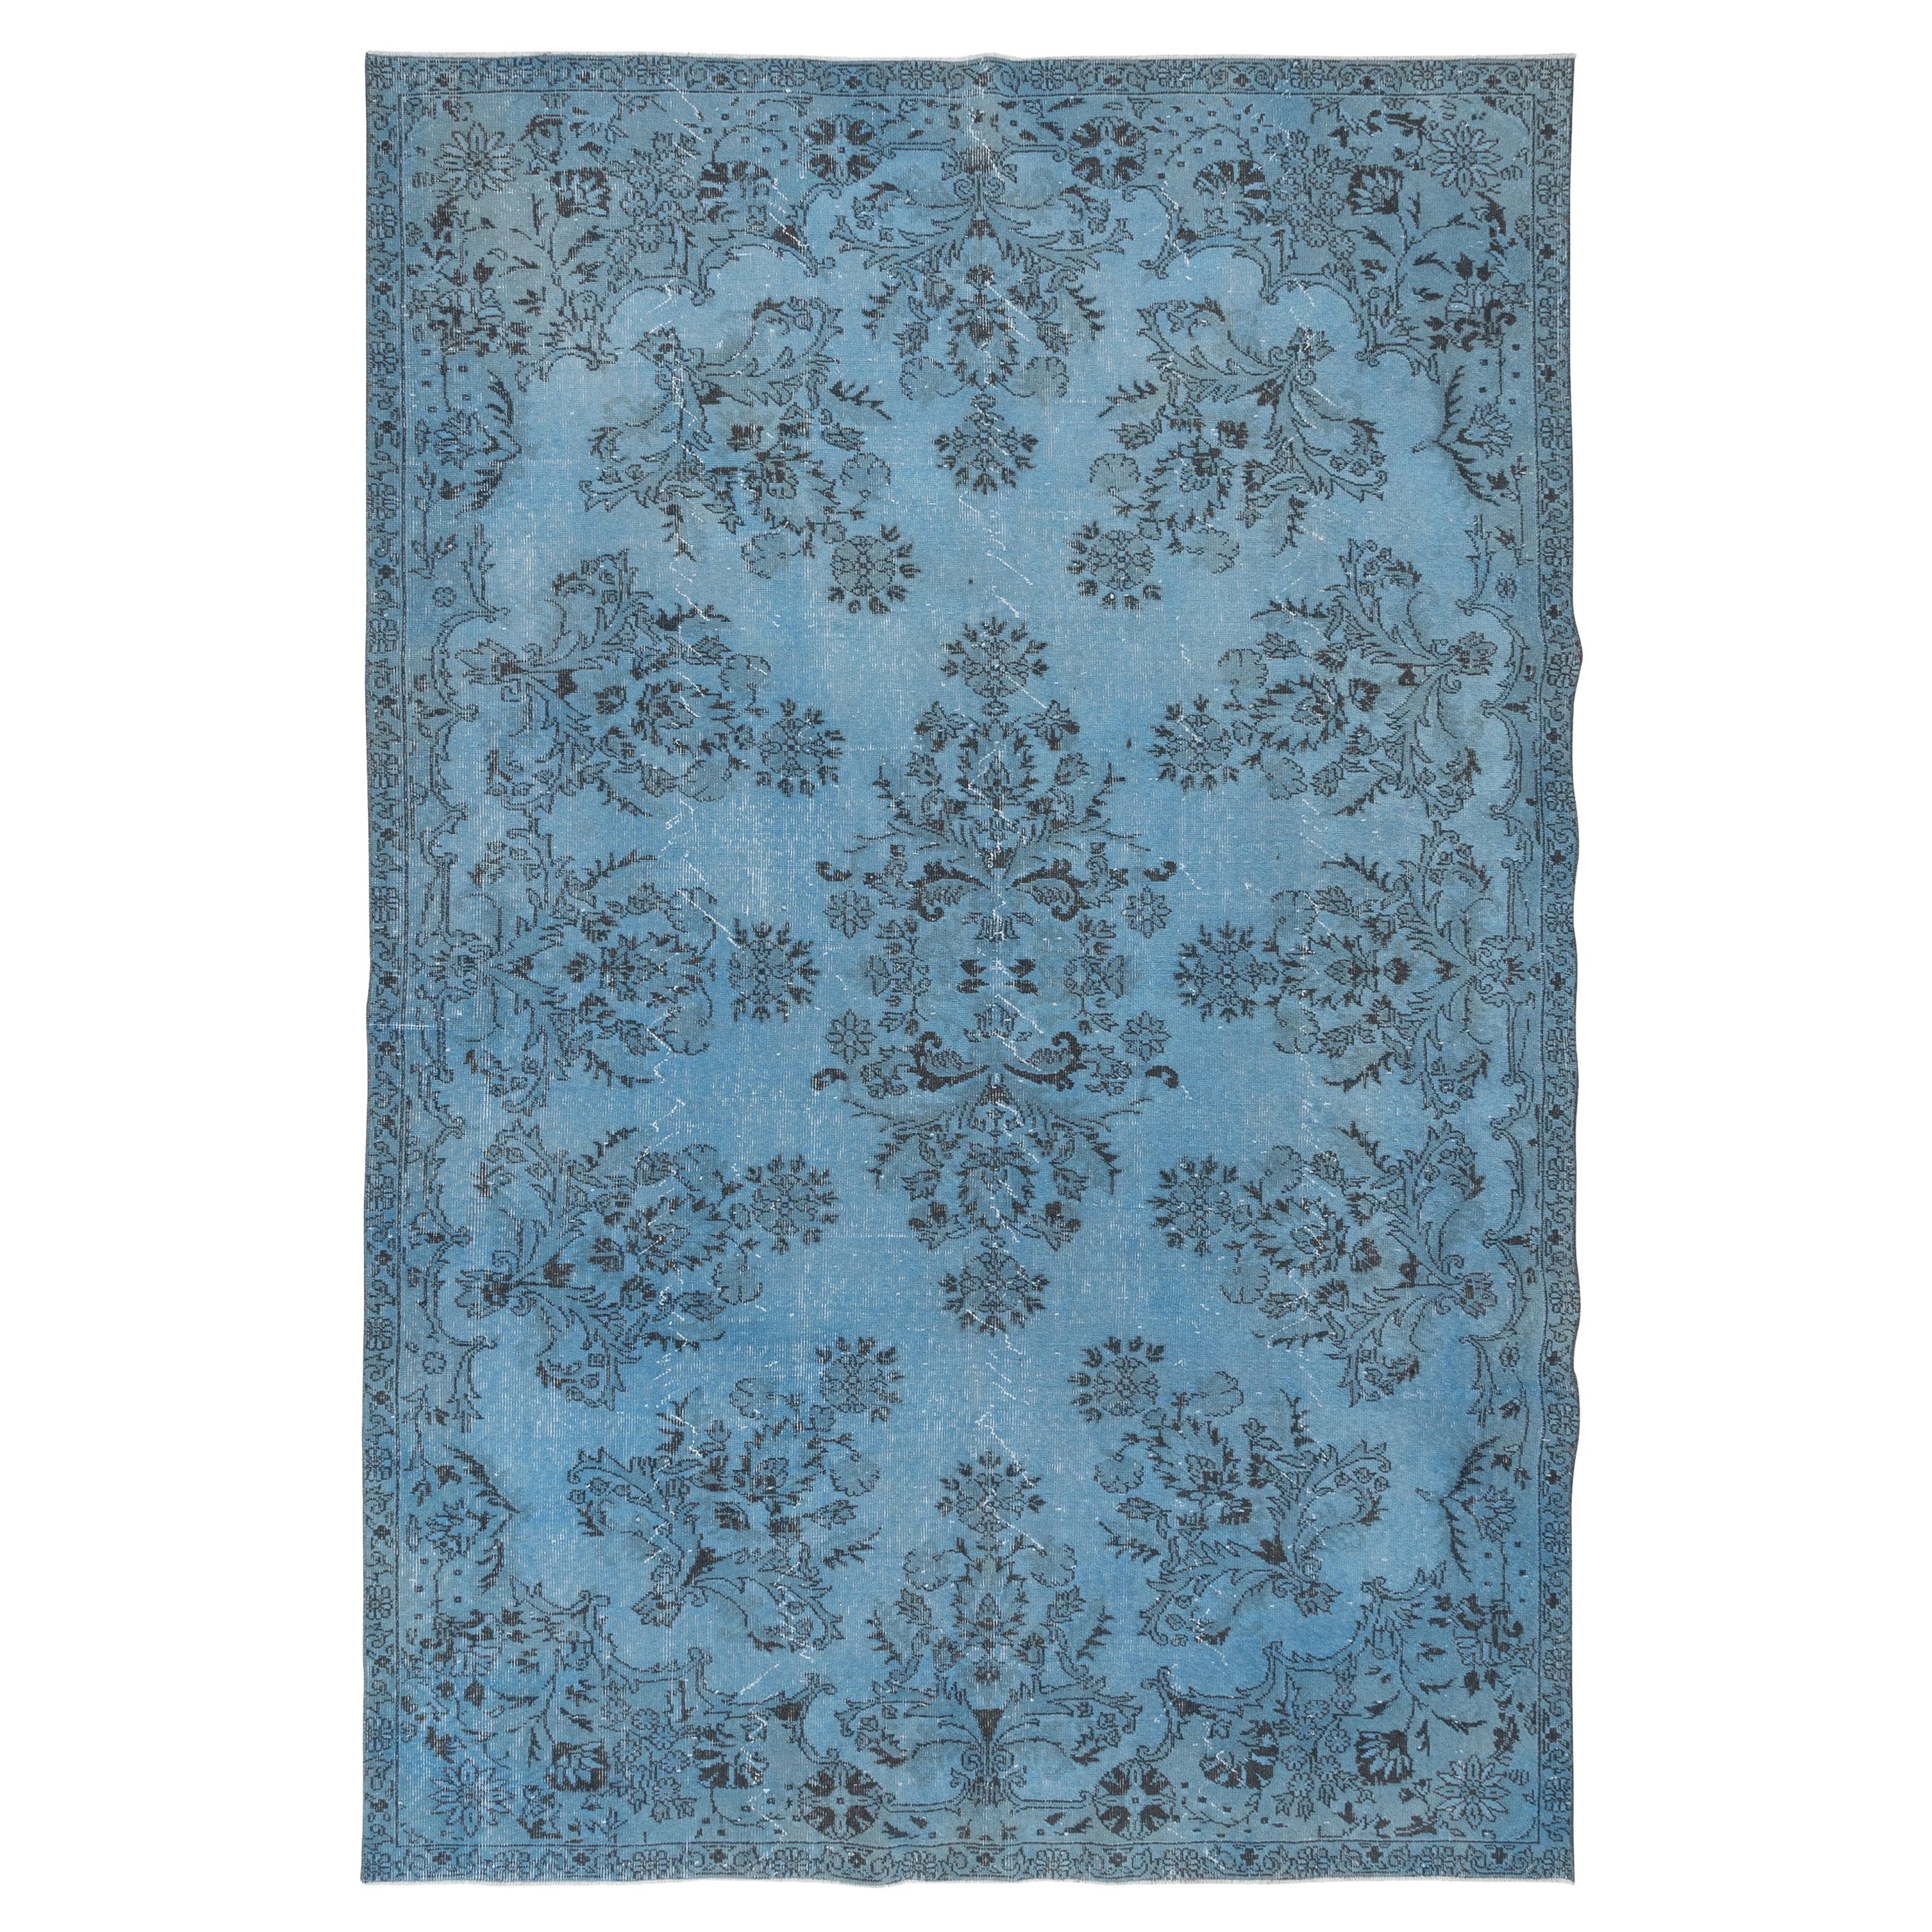 7x10.6 Ft Light Blue Modern Area Rug, Handmade Turkish Wool Living Room Carpet